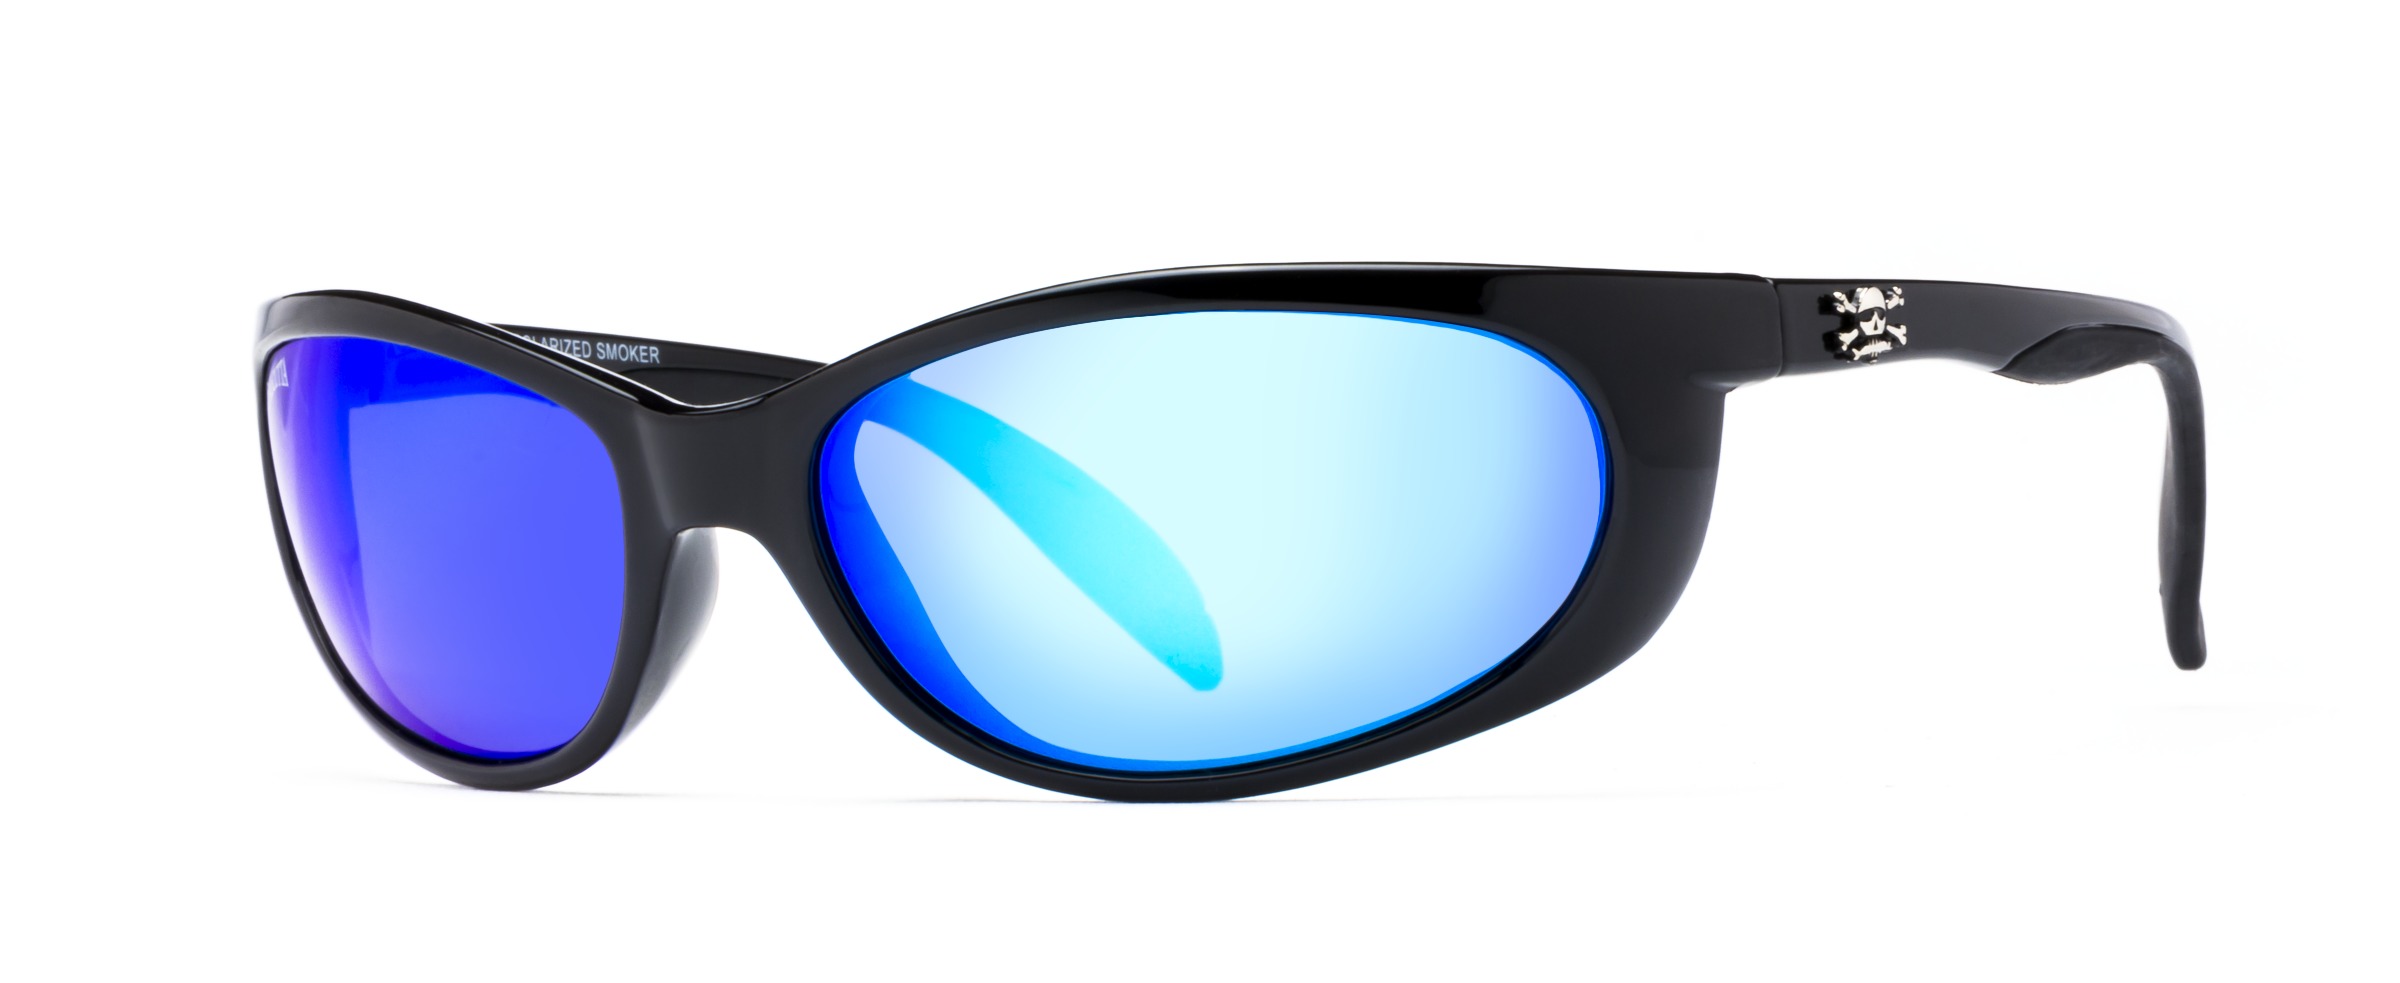 Calcutta SK1BM Smoker Sunglasses Shiny Black/Blue Mirror 60mm Lens